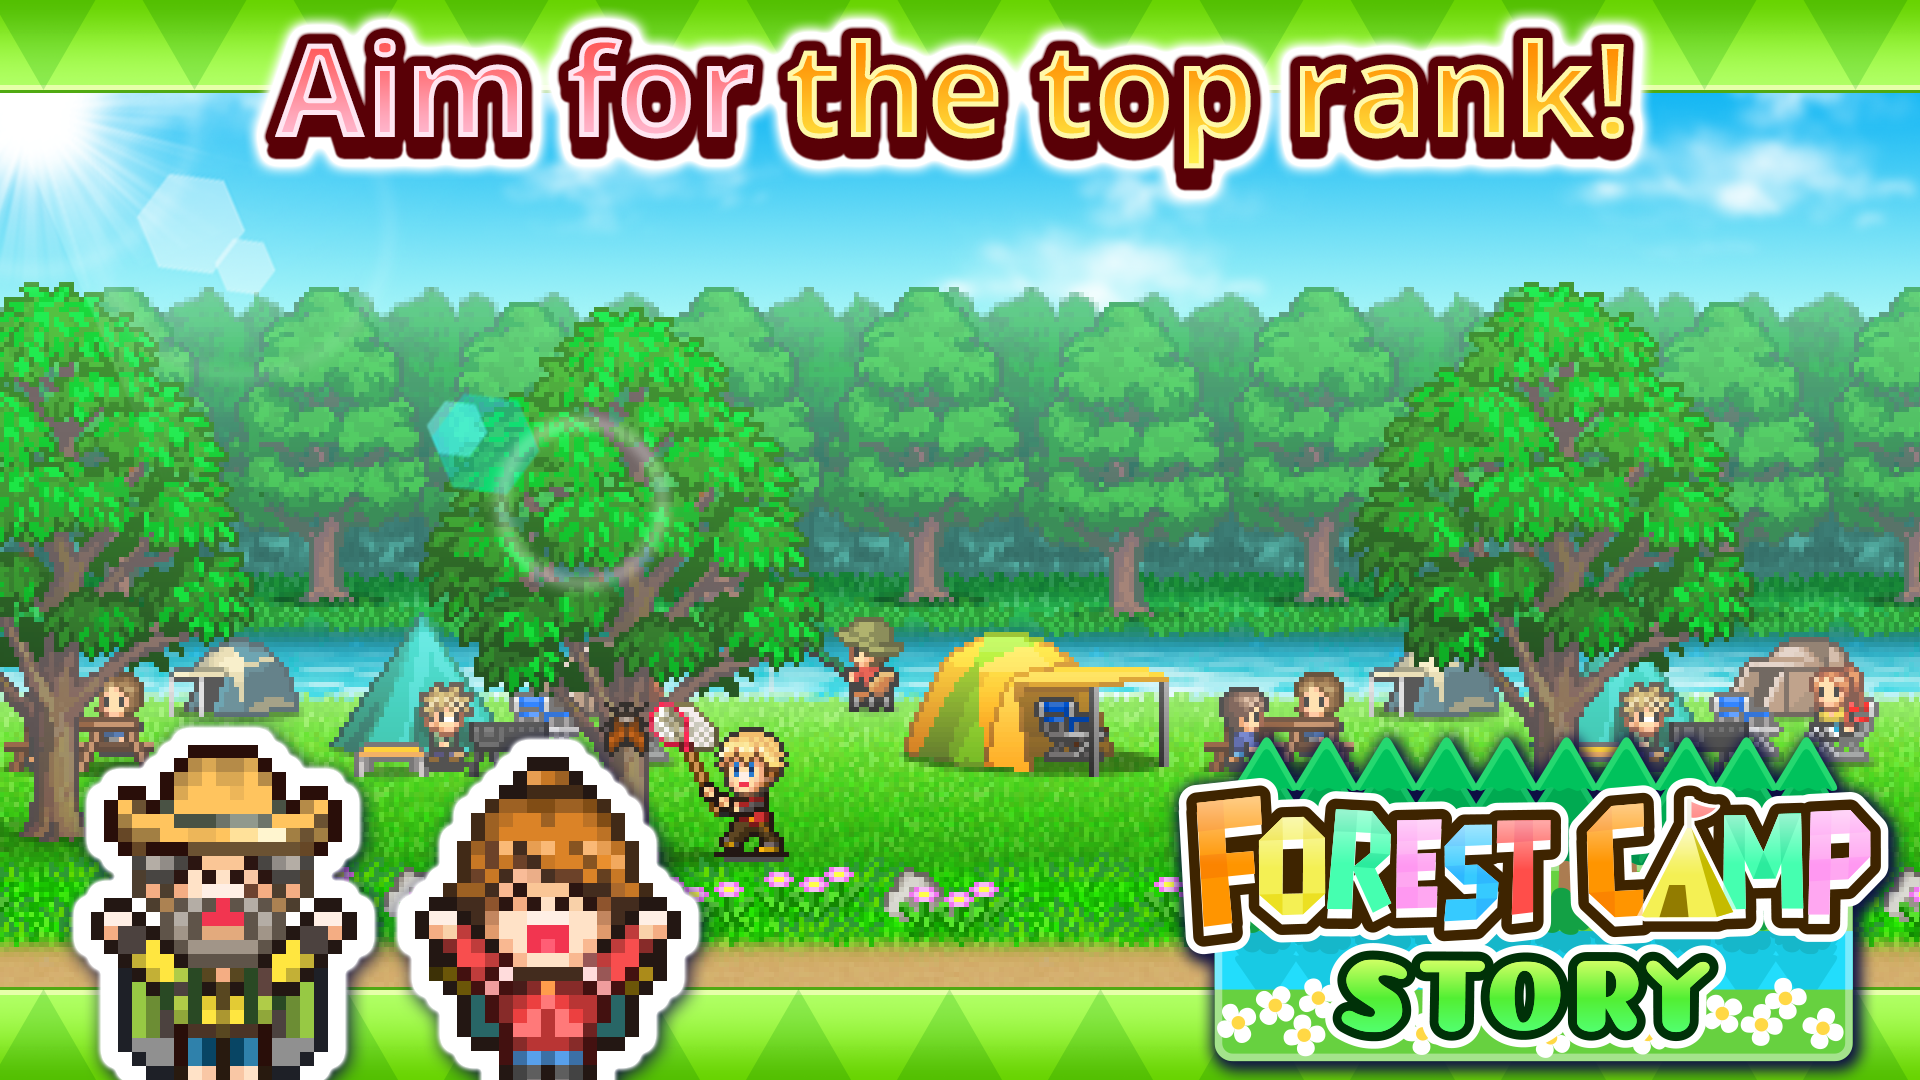 forest-camp-story-mod-apk